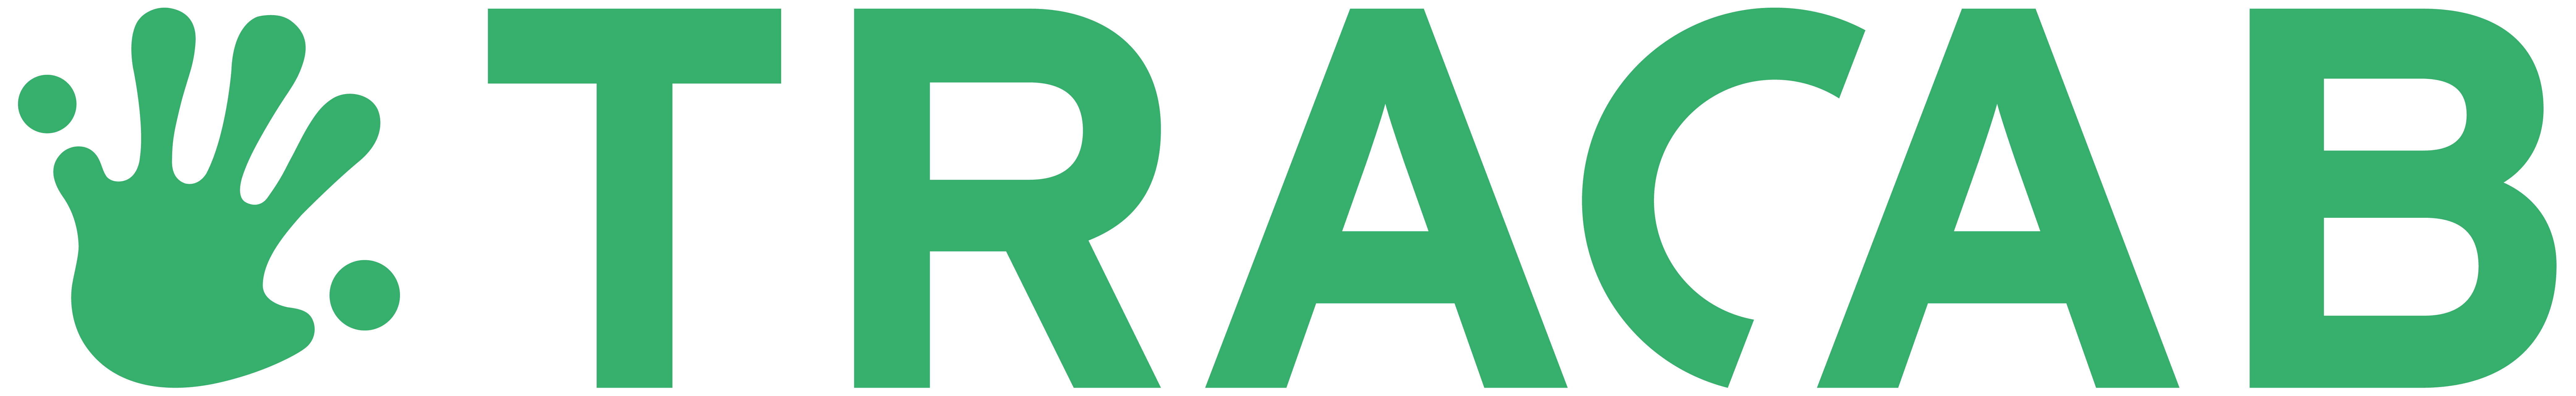 Tracab_OneLine logo_Green-3